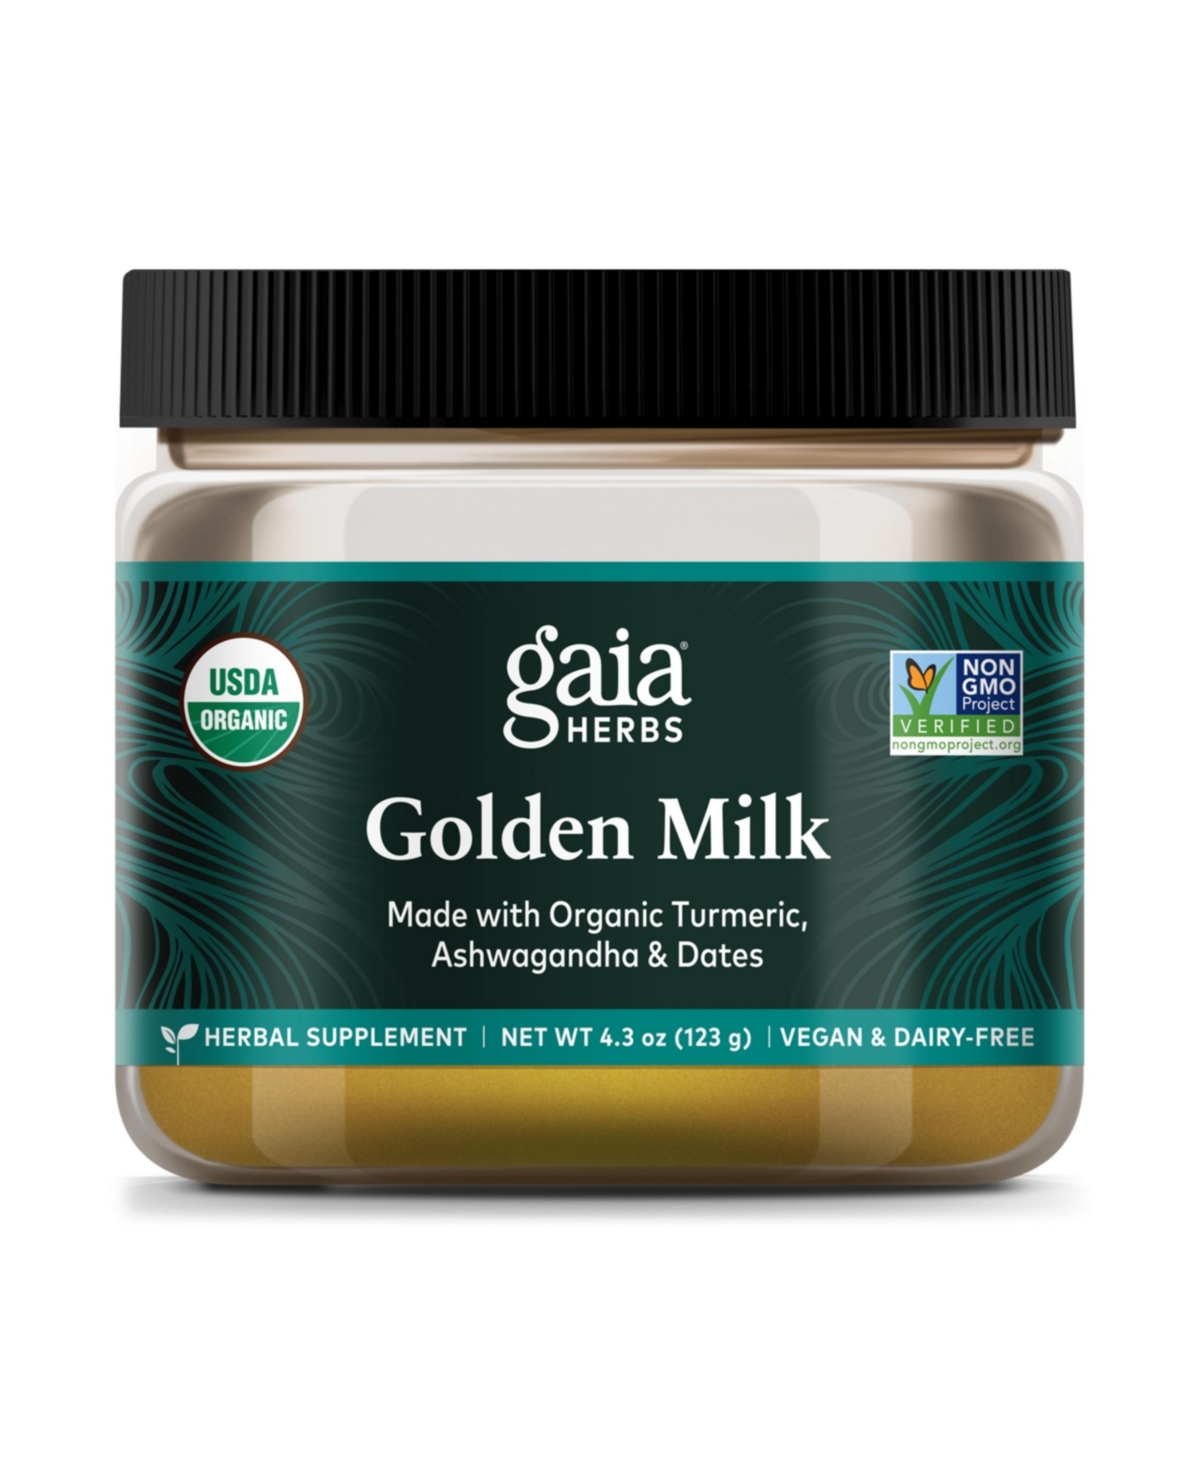 Golden Milk Supplement Powder - Made with Organic Turmeric Curcumin, Black Pepper, Ashwagandha, Dates, Cardamom, and Vanilla for an Ayurved